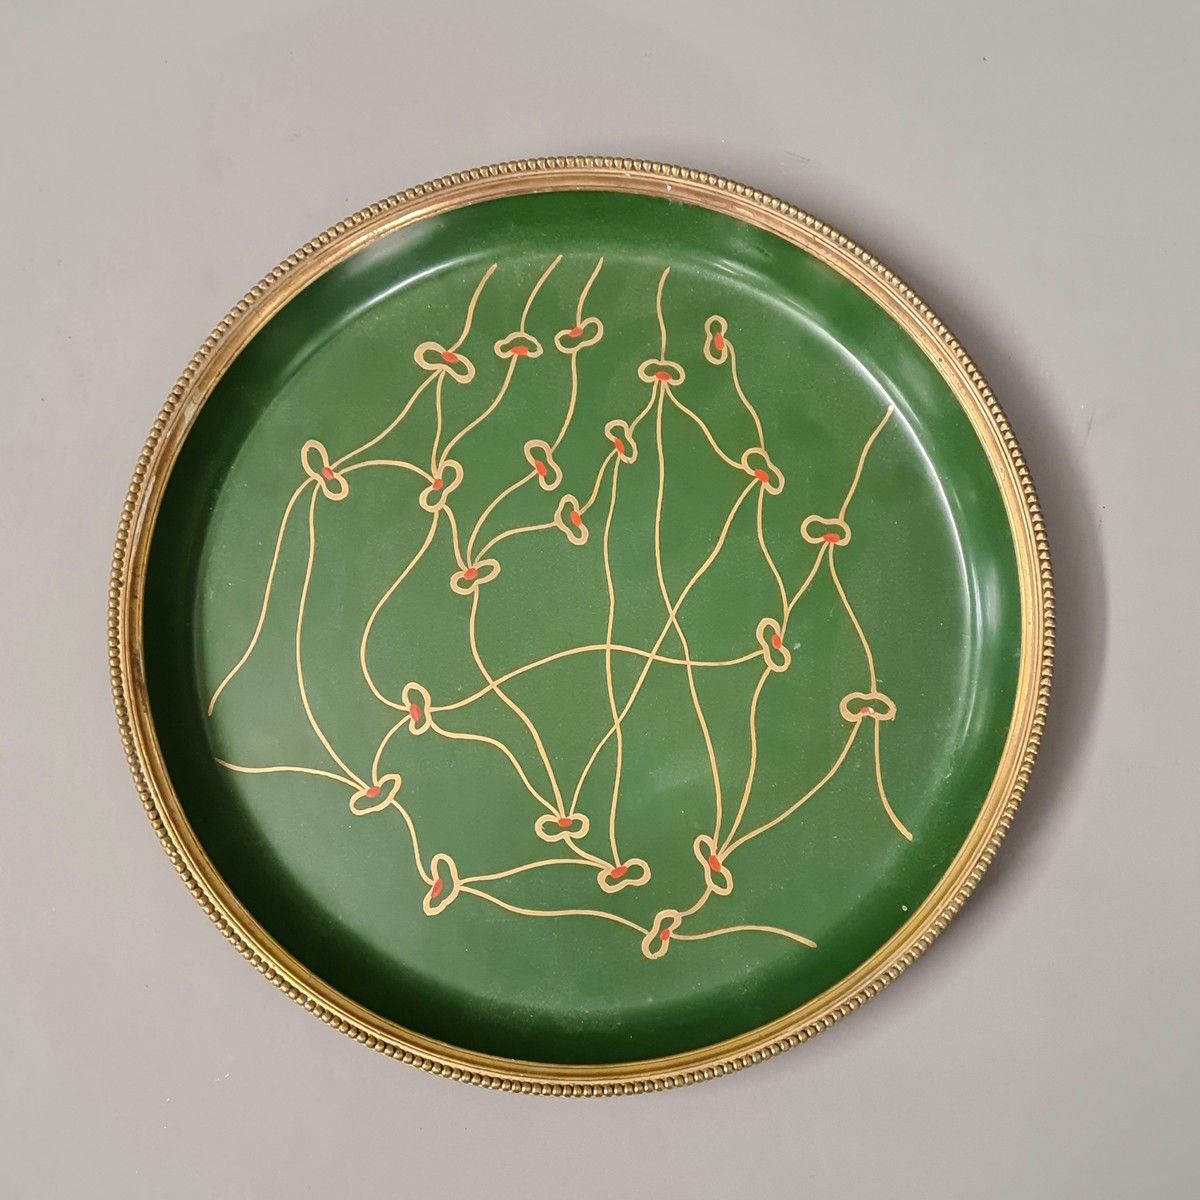 Null 装饰艺术风格的圆形漆面纸板托盘，绿色背景上有金色和红色的花纹装饰，镀金的黄铜框架上有珍珠装饰。

D. 27厘米